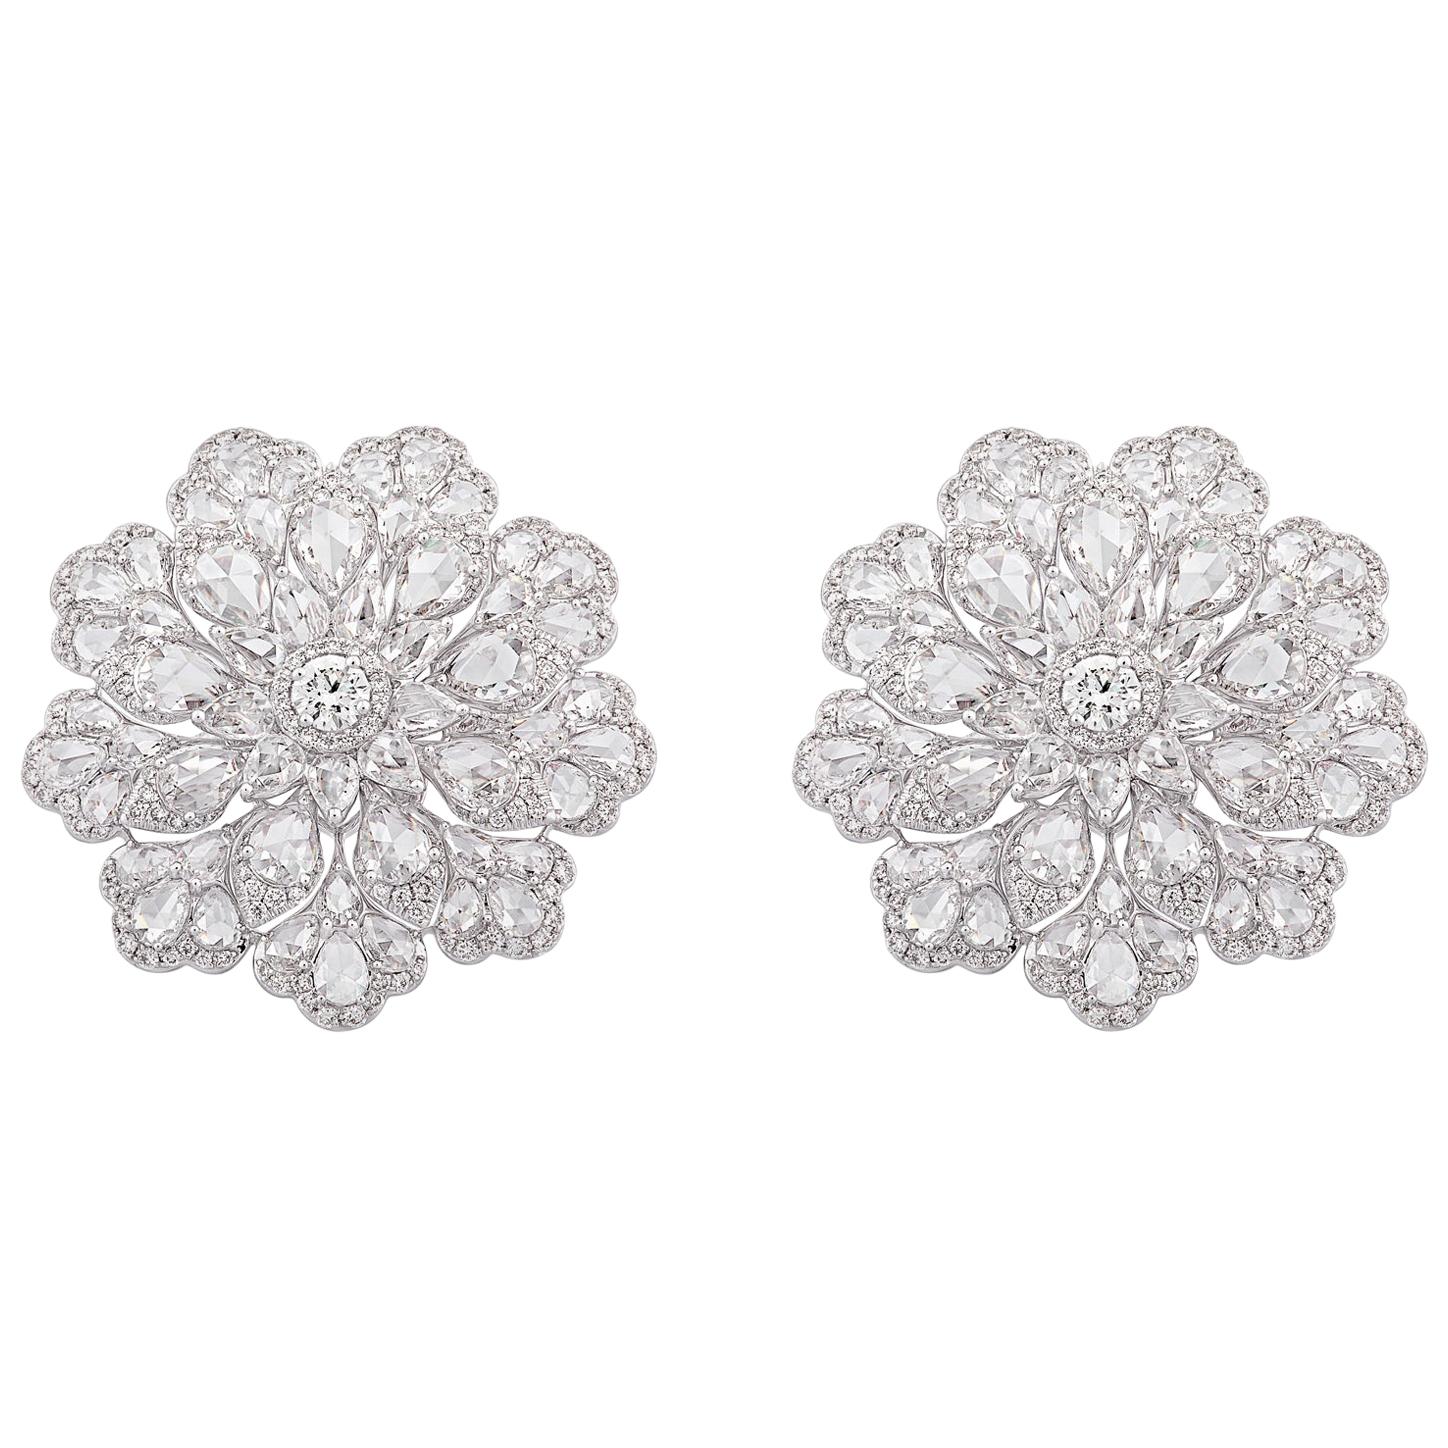 18 Karat White Gold Top Rose Cut Diamond Floral Inspired Earrings Studs